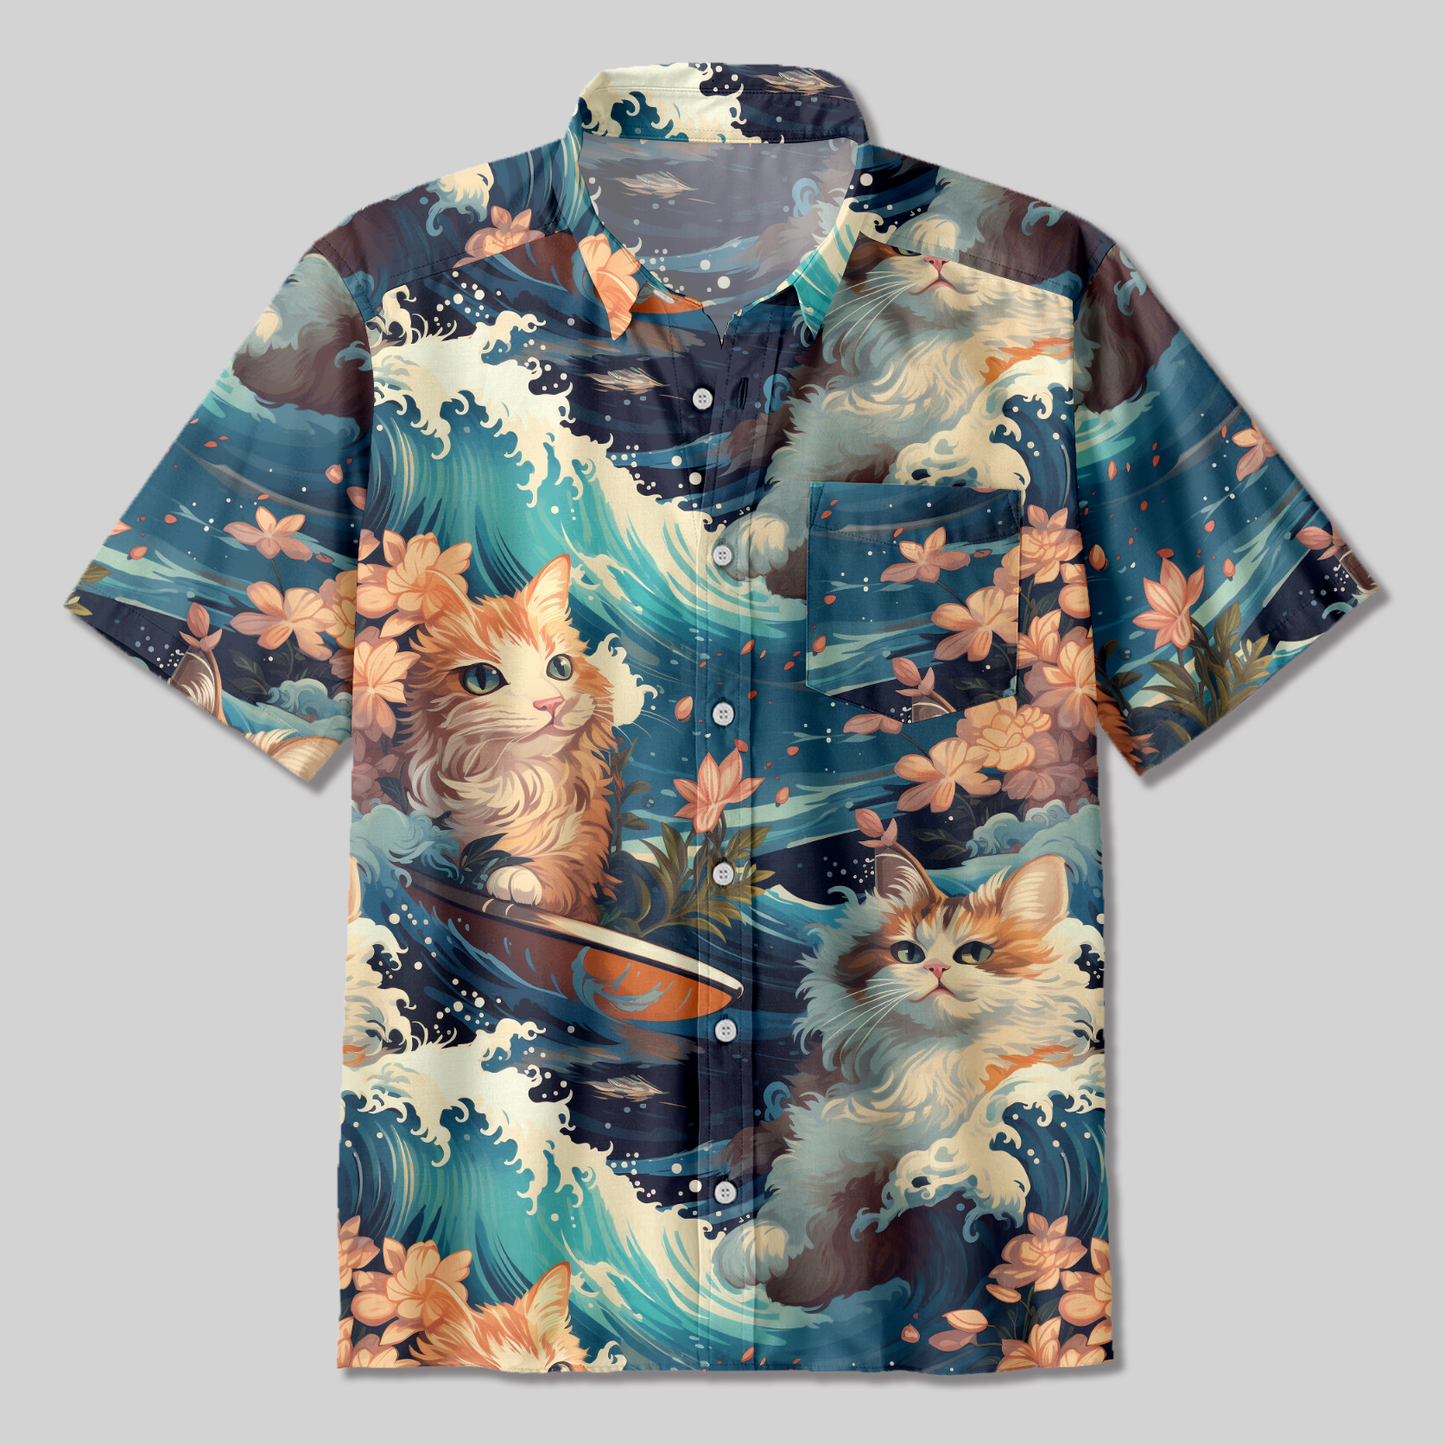 Splash and Cat Button Up Pocket Shirt